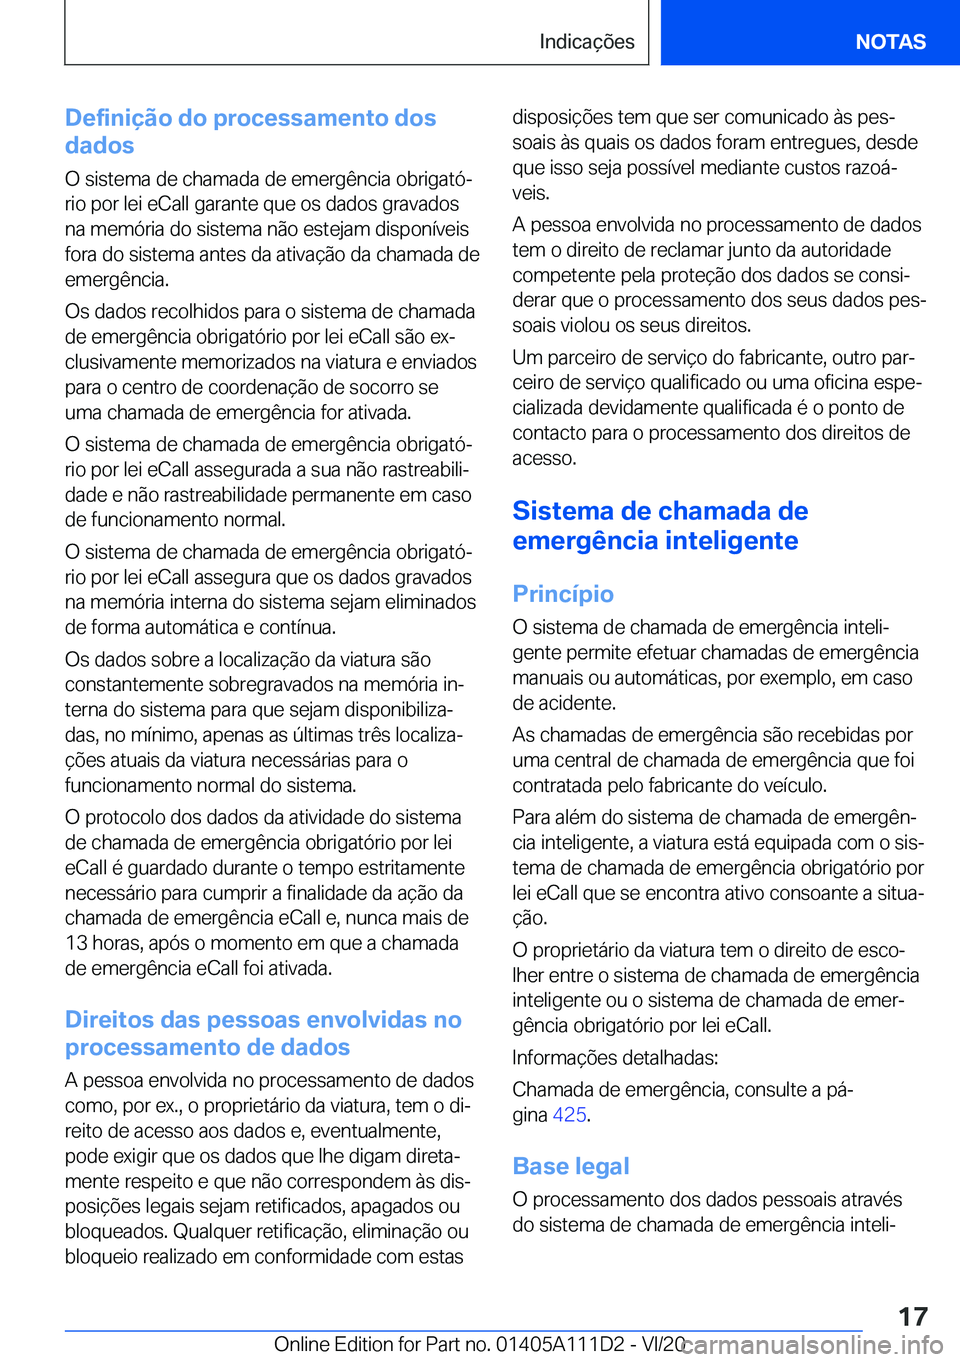 BMW 3 SERIES SEDAN PLUG-IN HYBRID 2021  Manual do condutor (in Portuguese) �D�e�f�i�n�i�